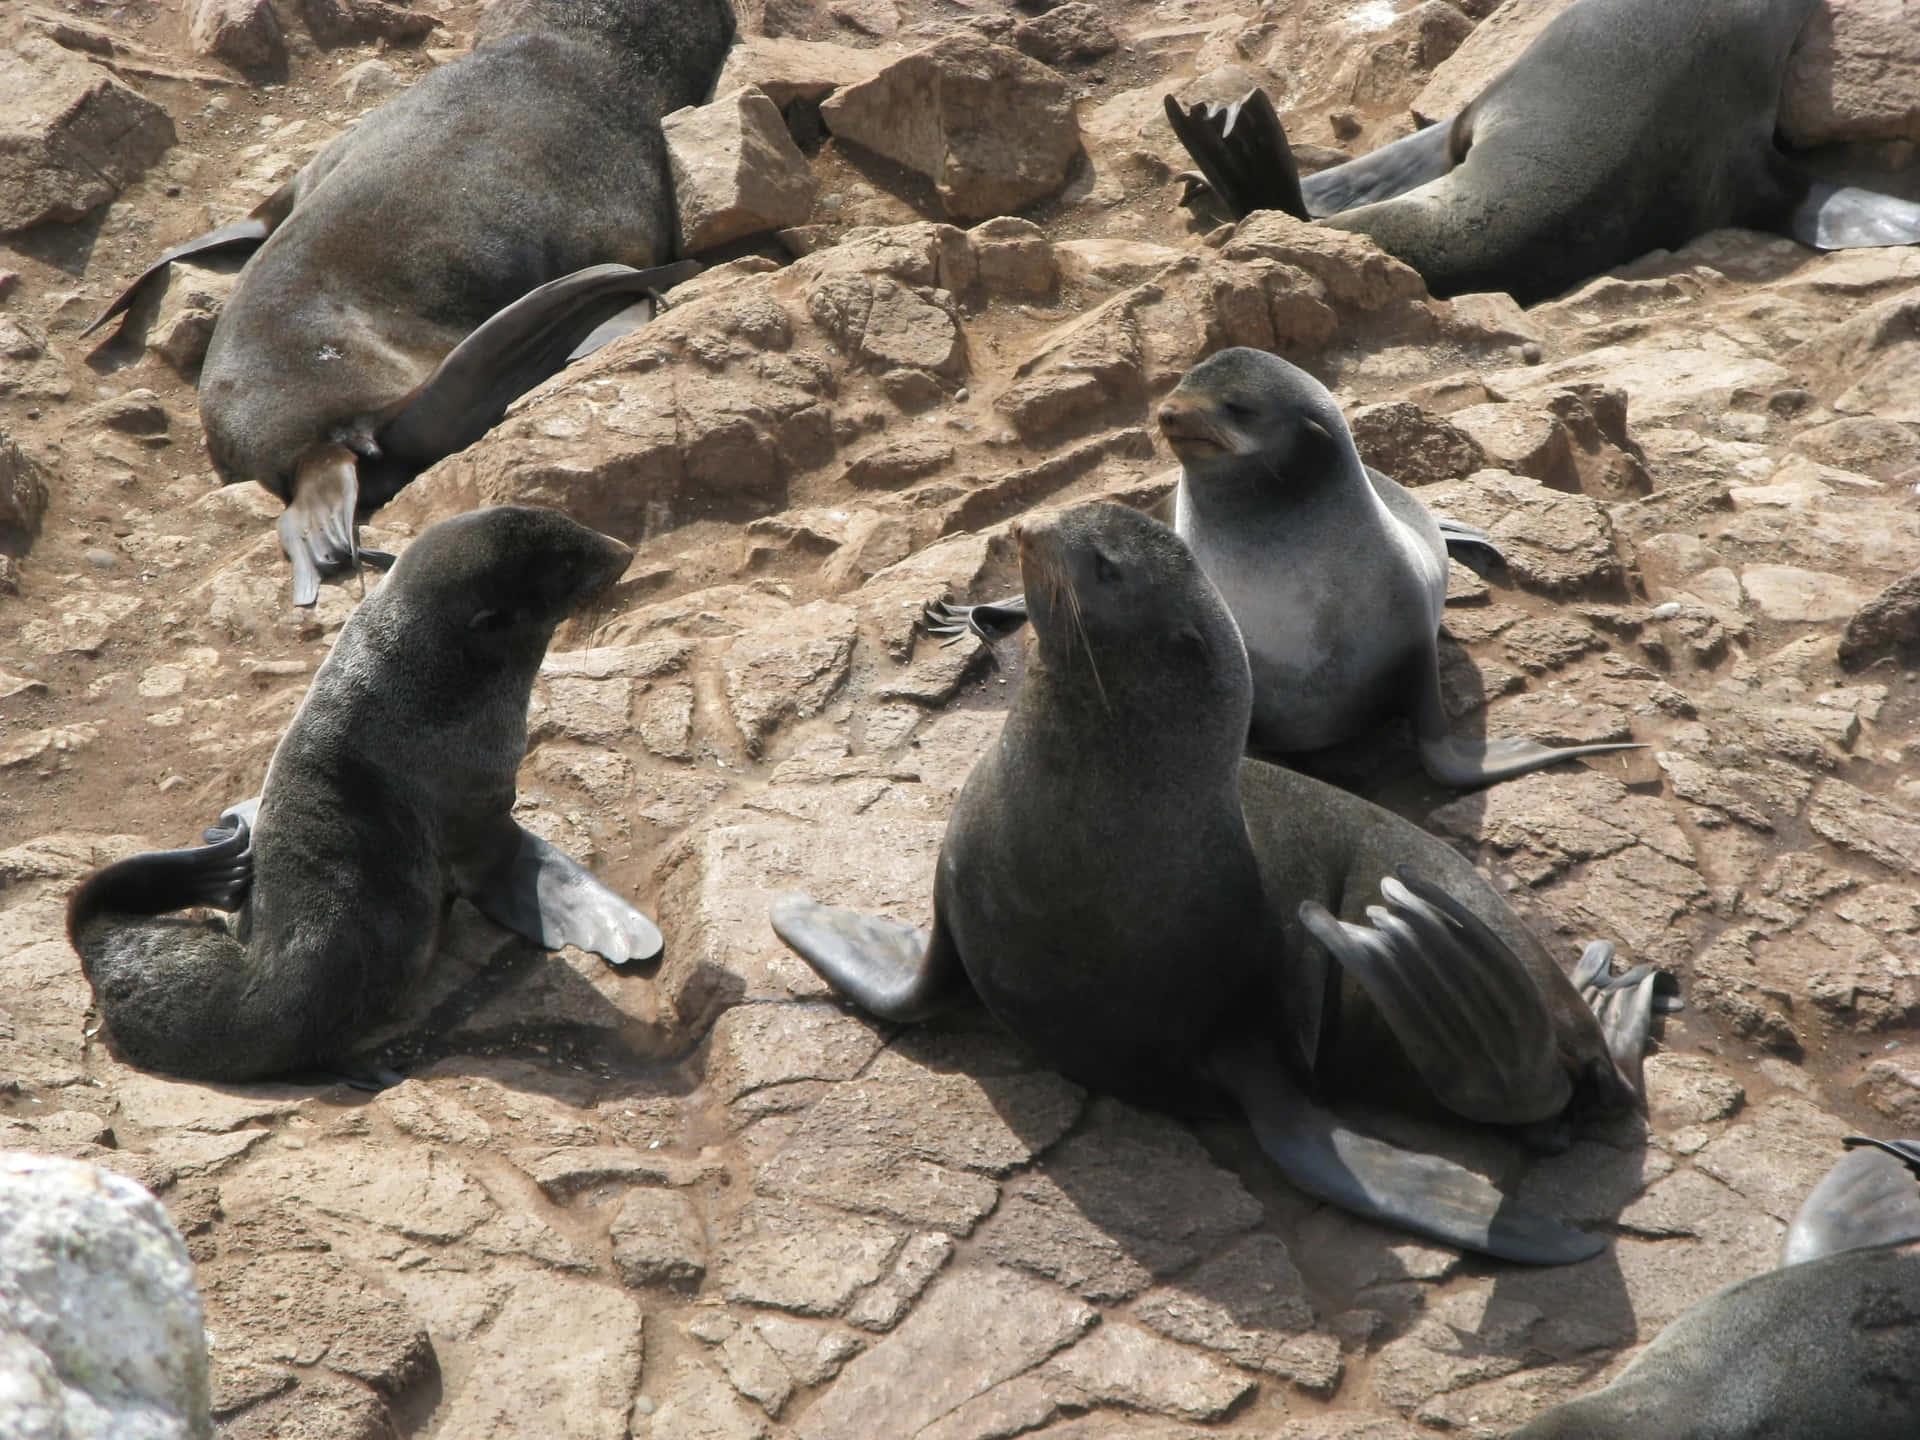 Northern Fur Seals Restingon Rocks Wallpaper